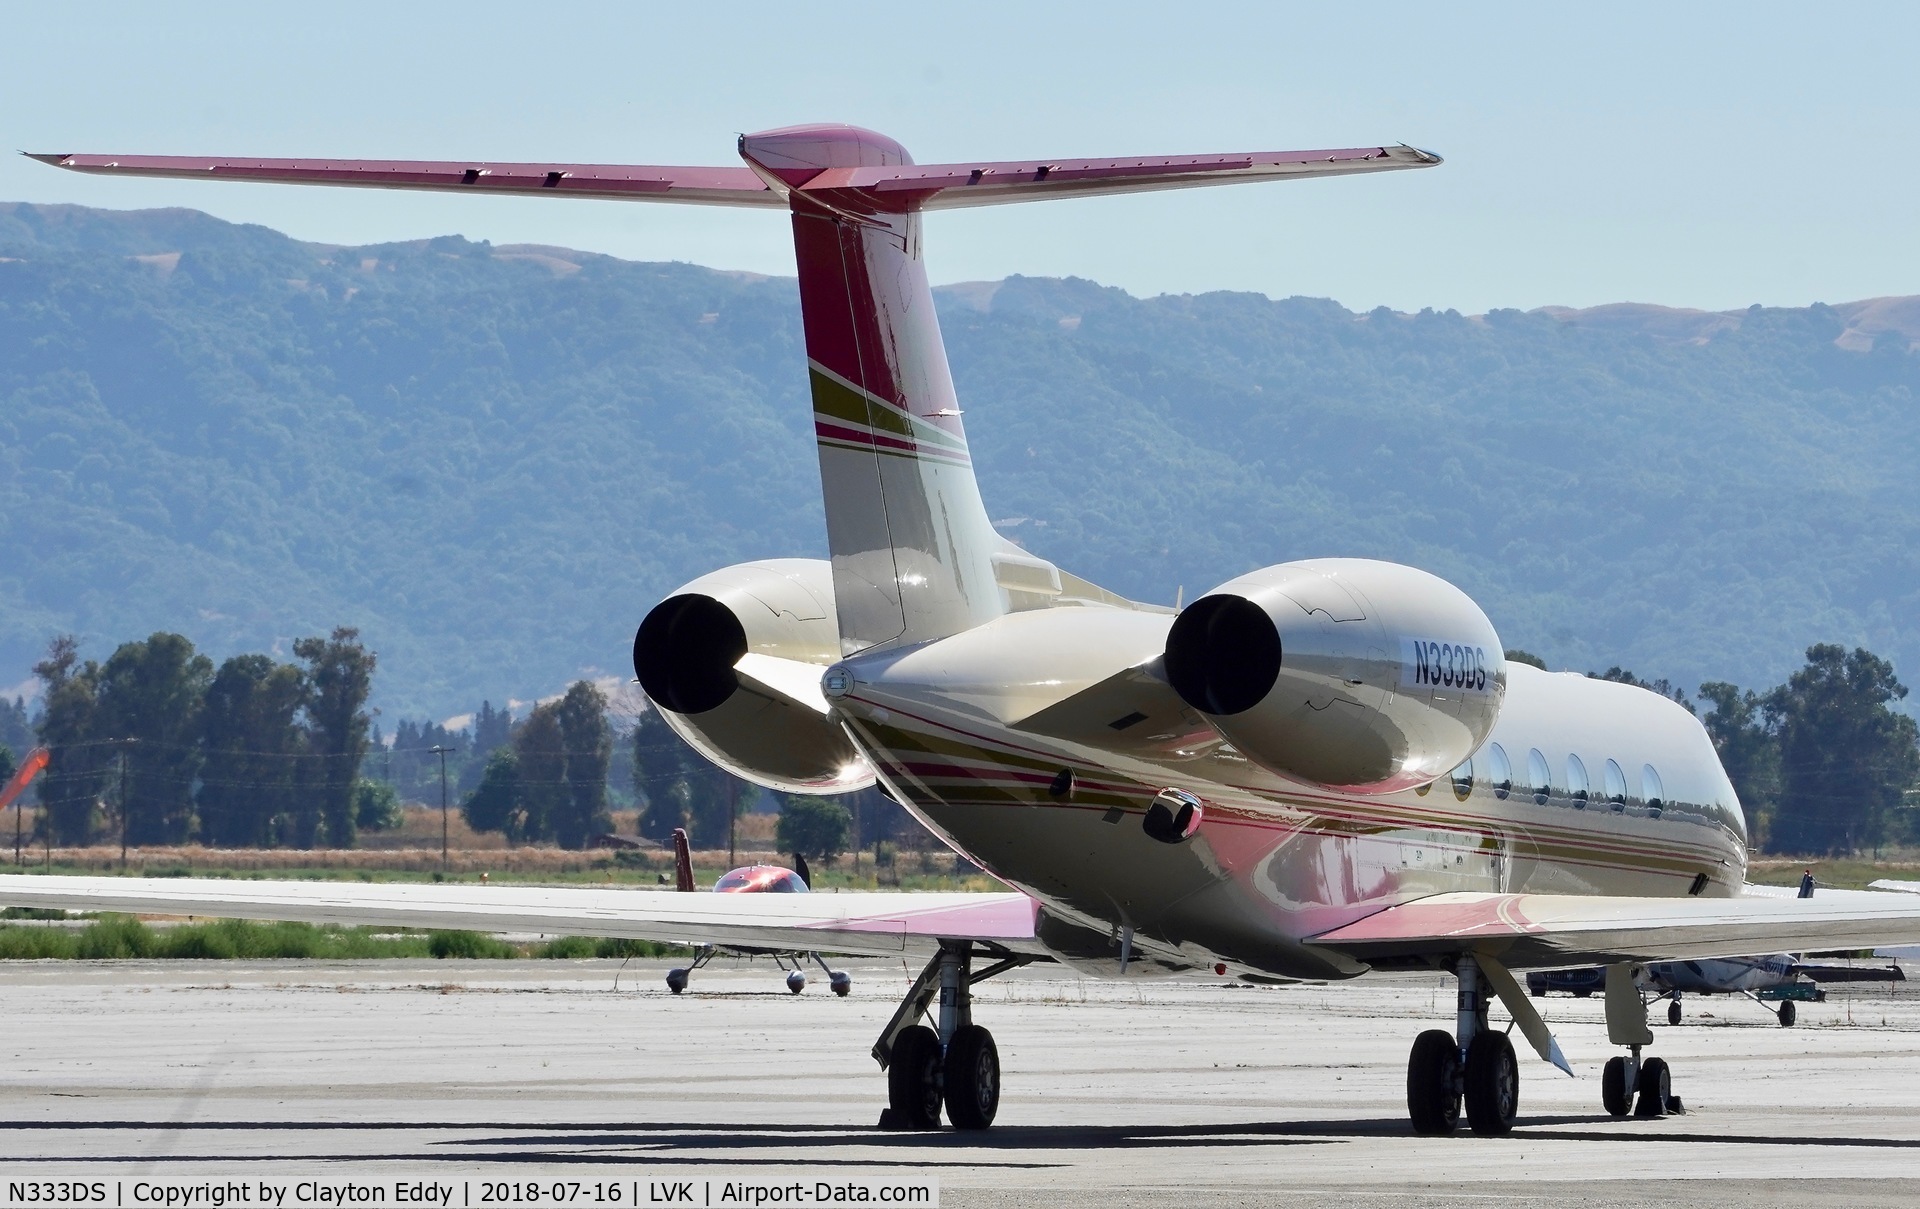 N333DS, 2010 Gulfstream Aerospace GV-SP (G550) C/N 5292, Livermore Airport California 2018.